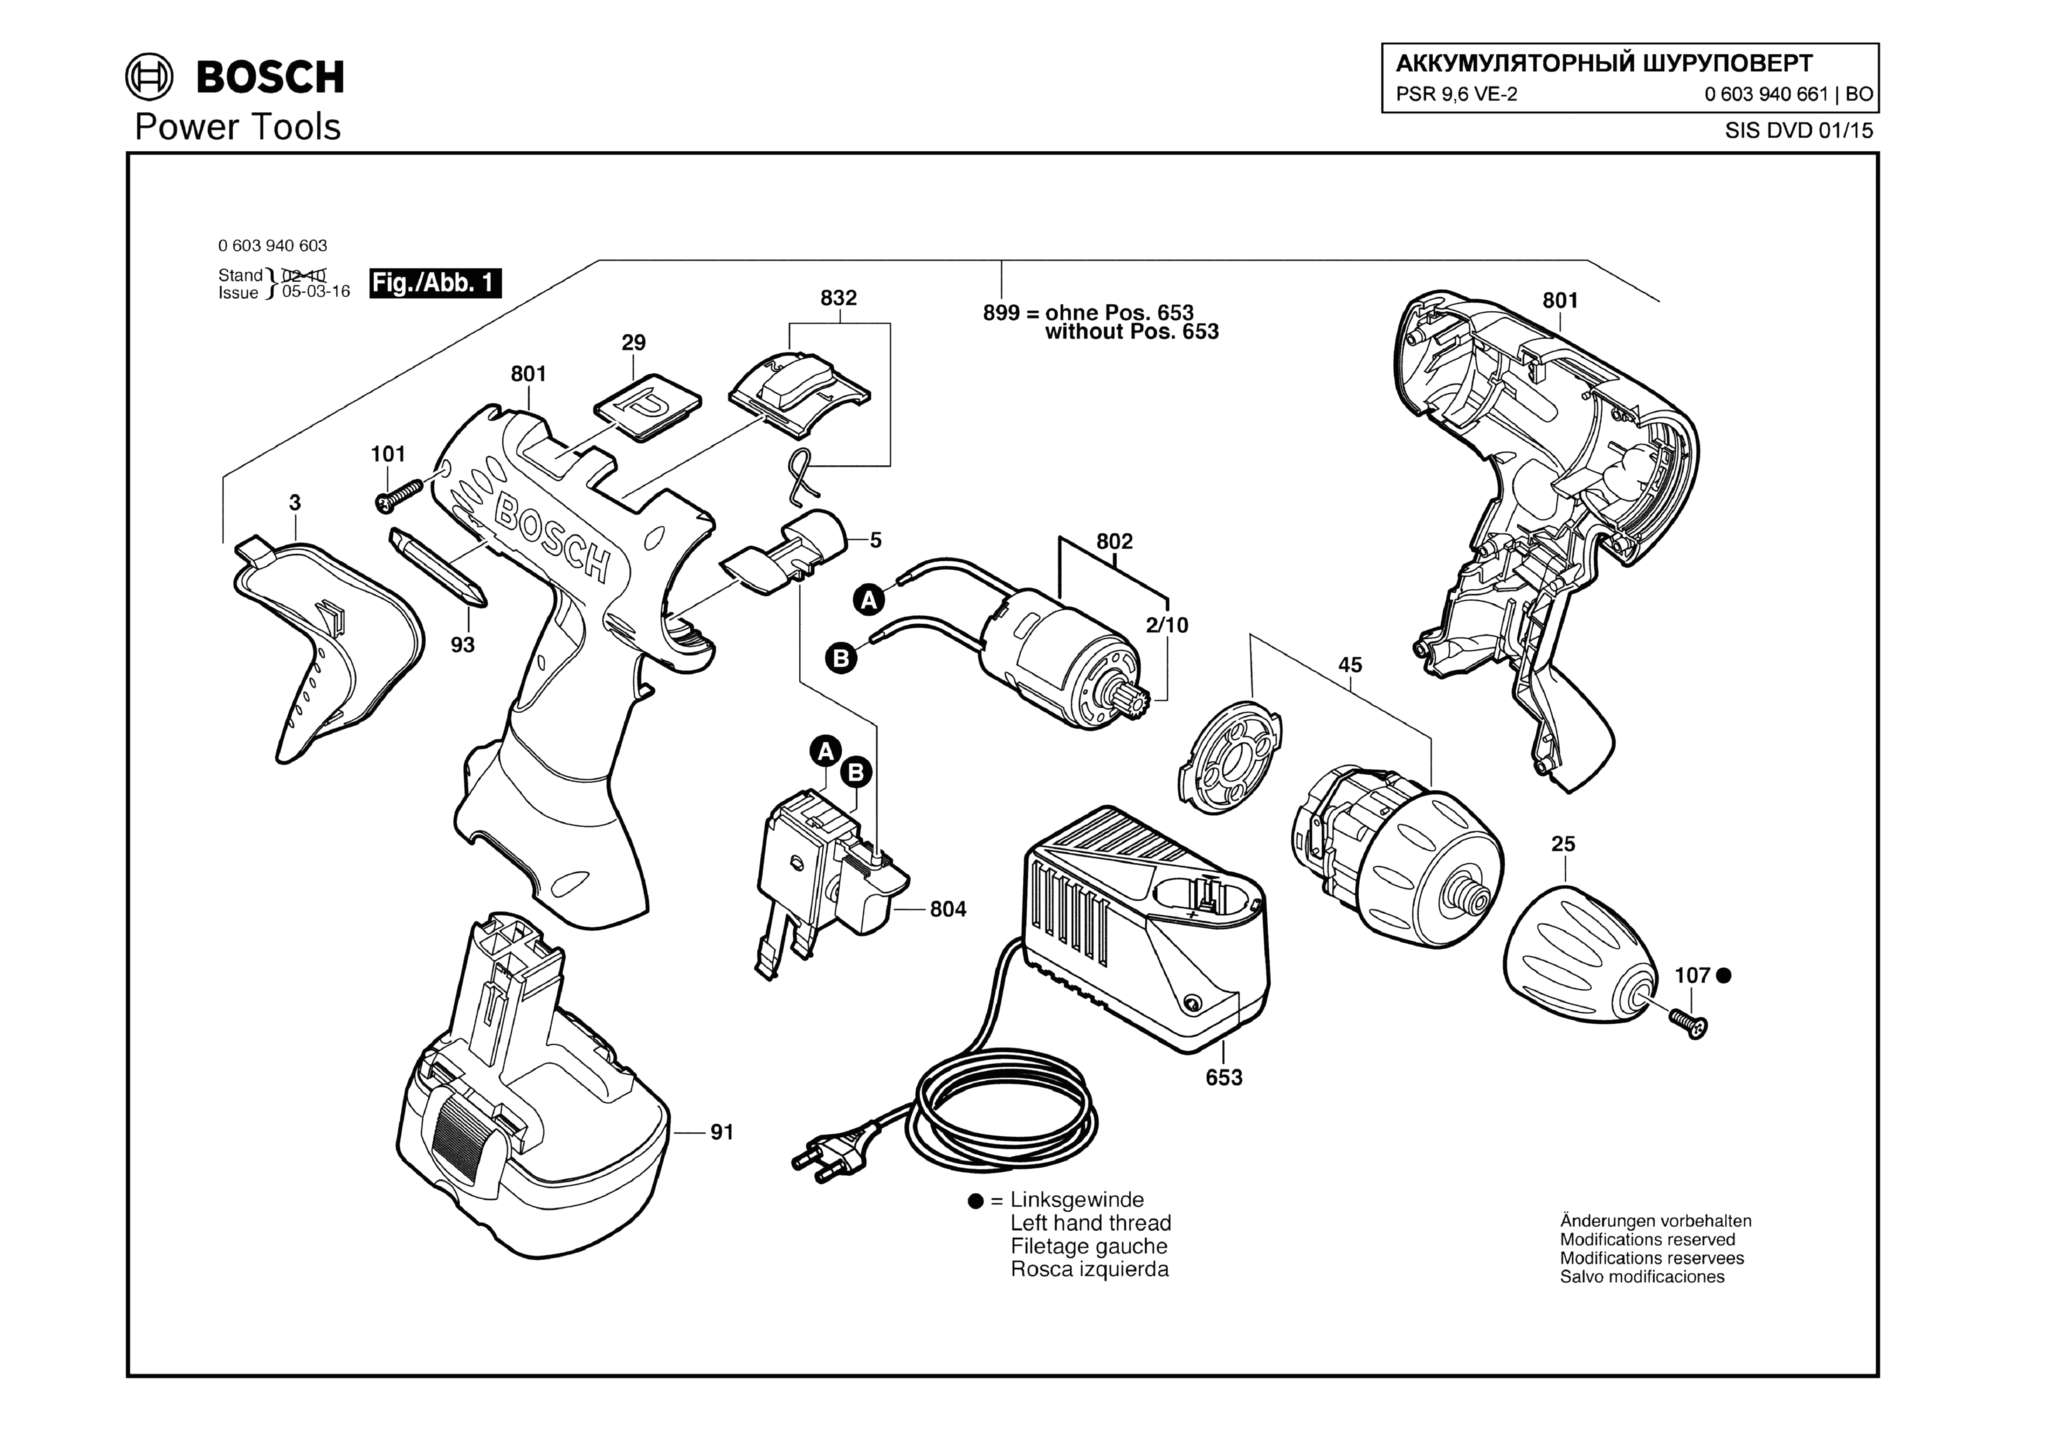 Запчасти, схема и деталировка Bosch PSR 9,6 VE-2 (ТИП 0603940661)